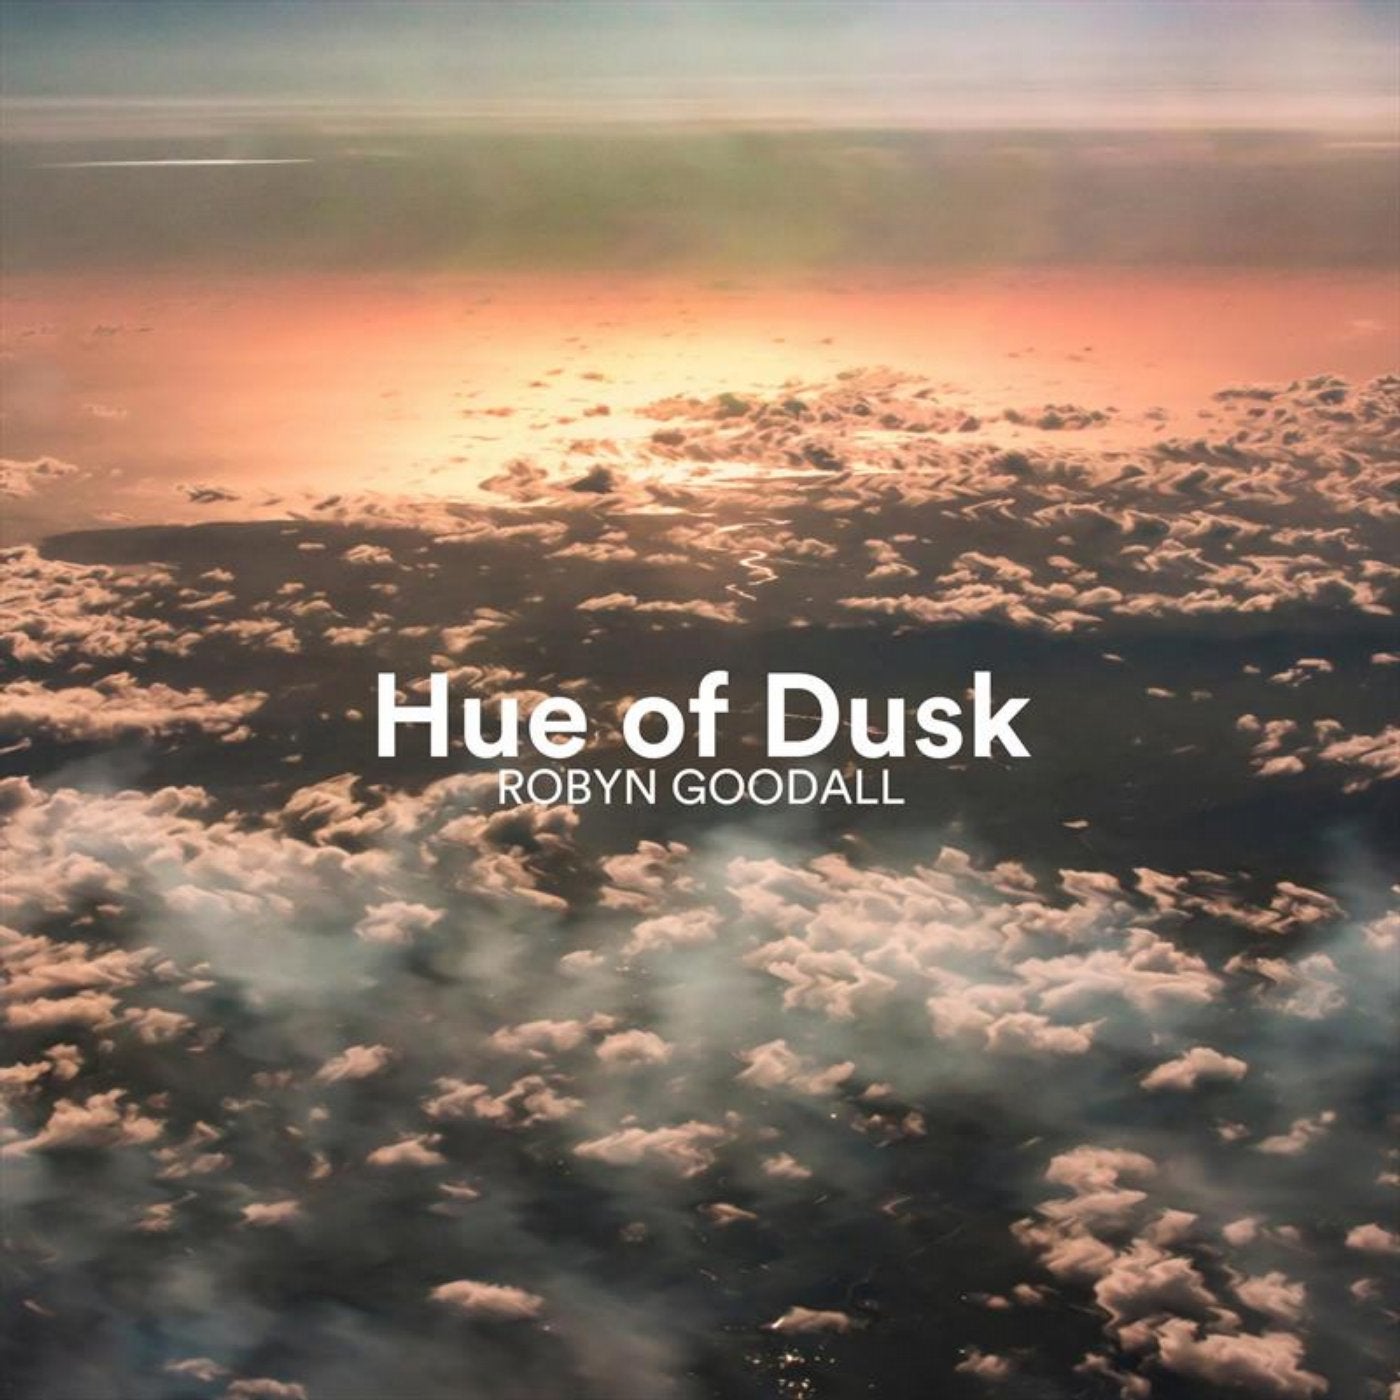 Hue of Dusk